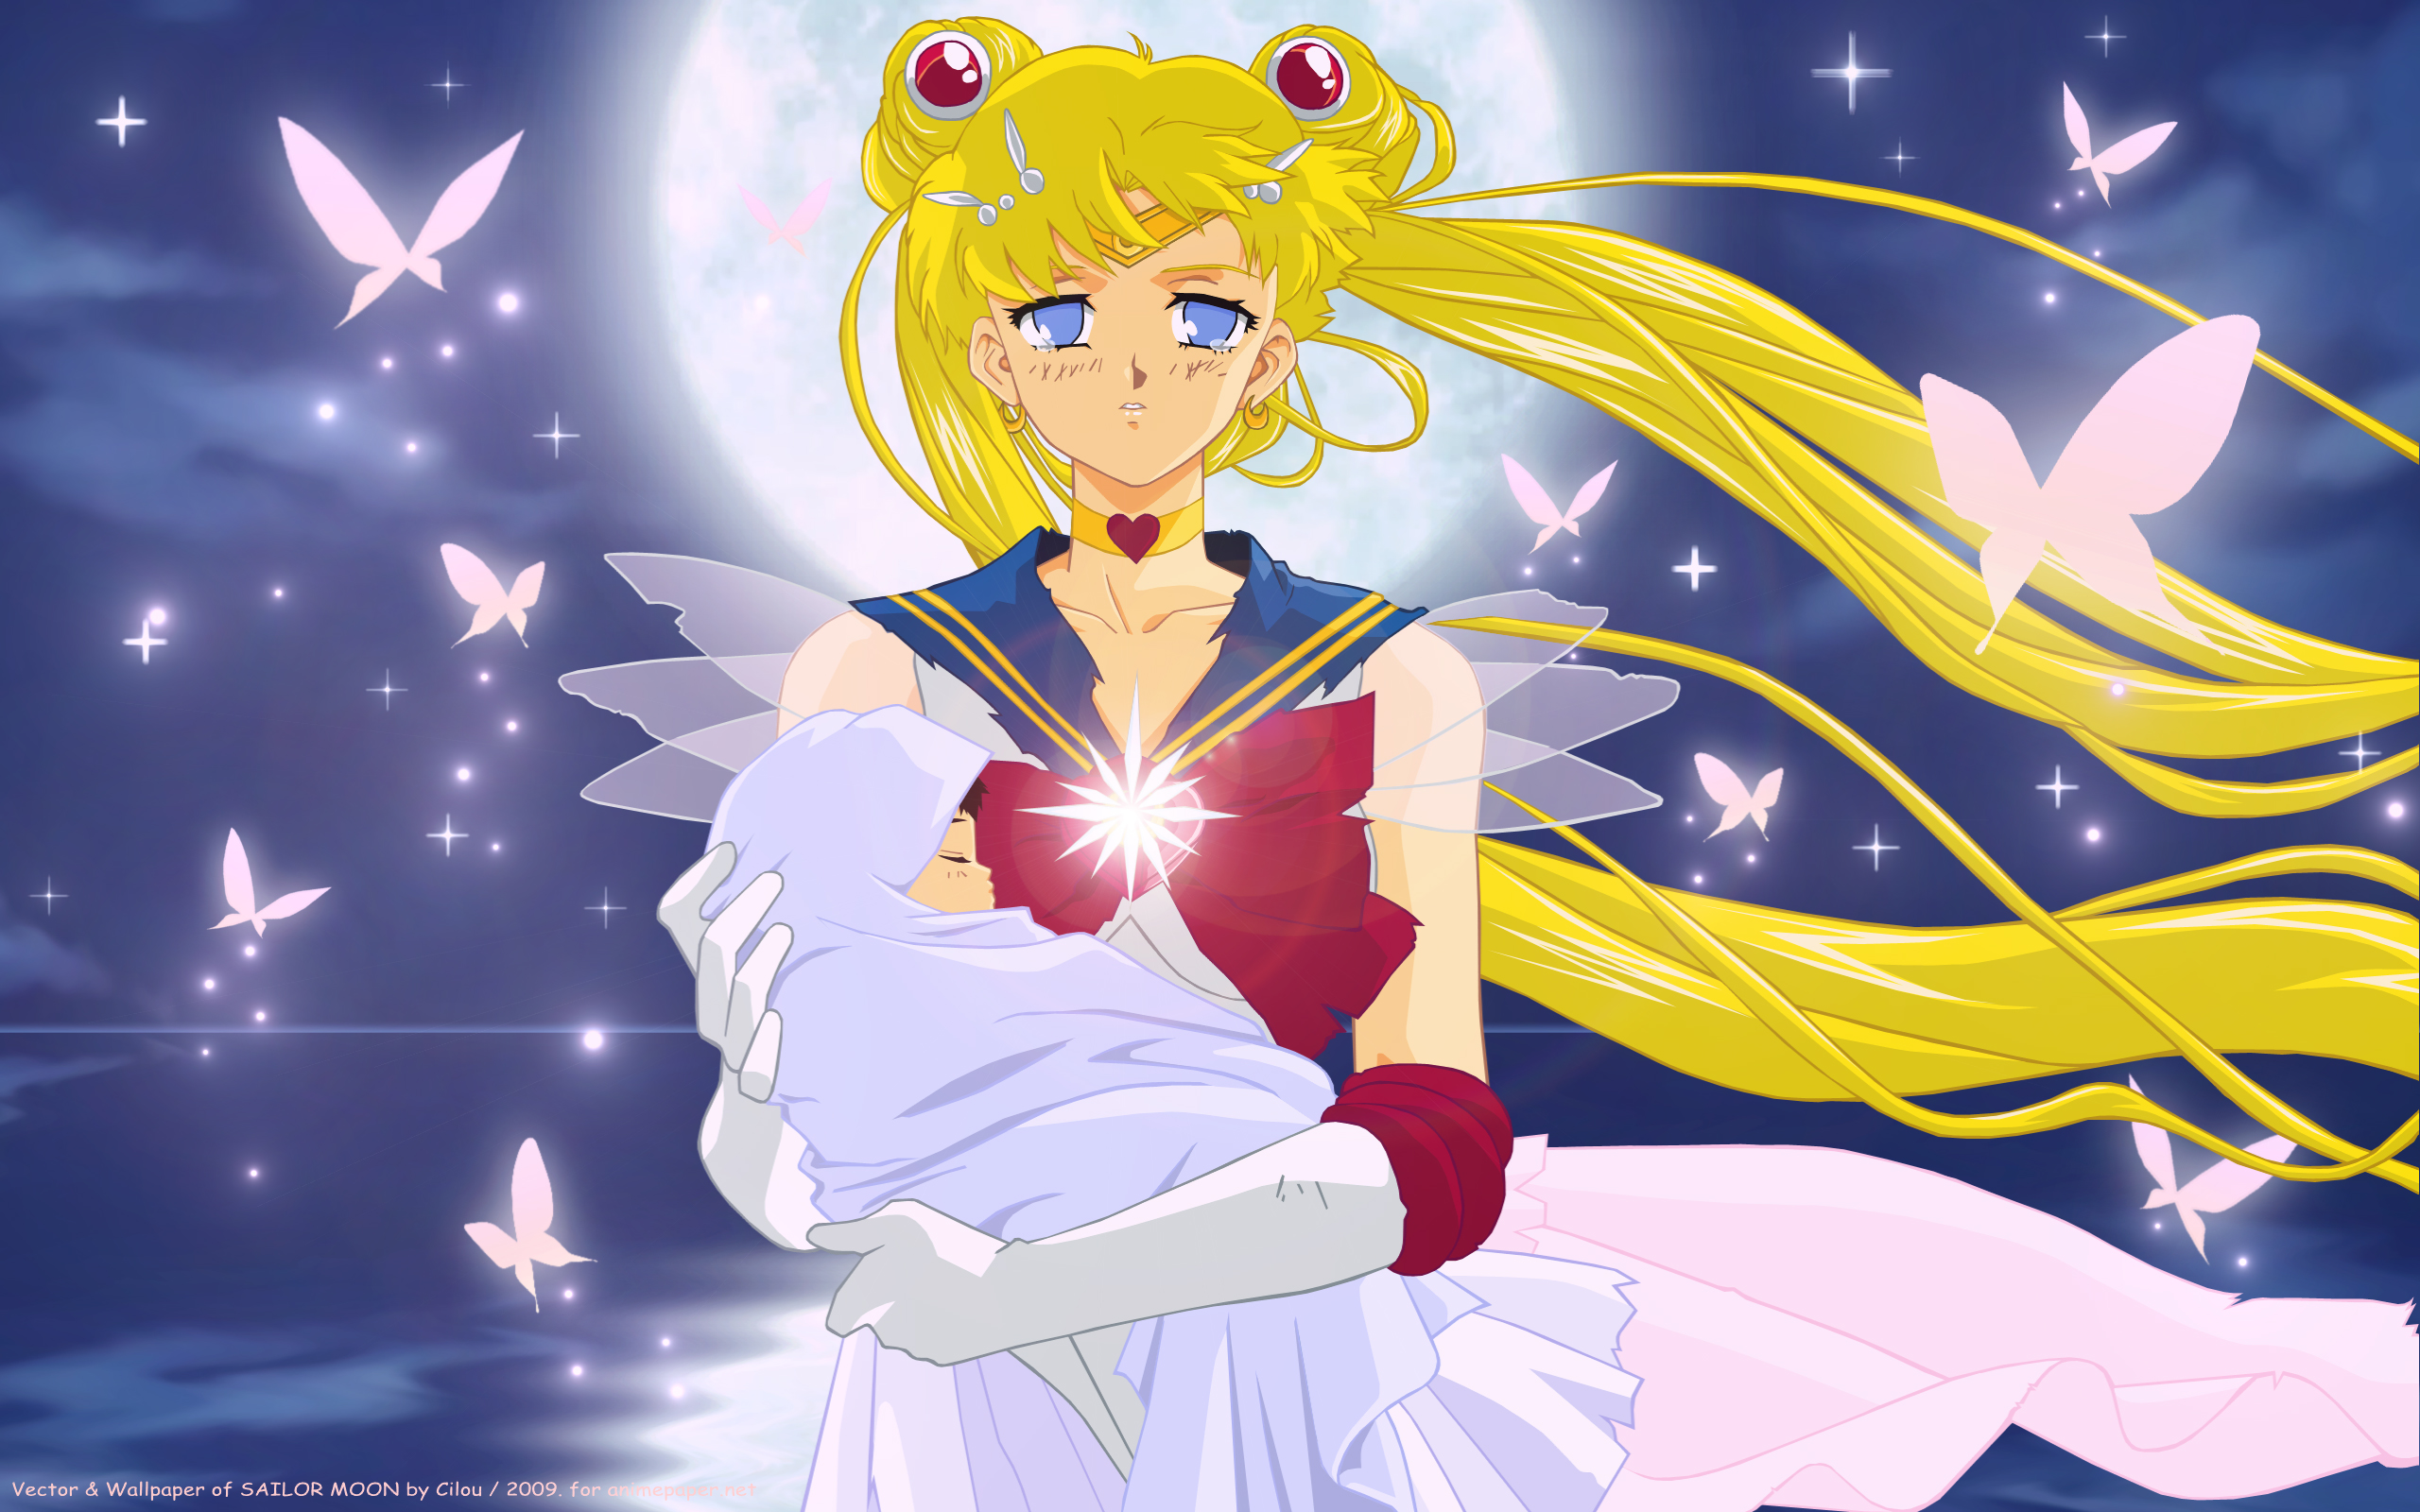 Sailor Moon and Hotaru - Sailor Moon Wallpaper (32184821) - Fanpop